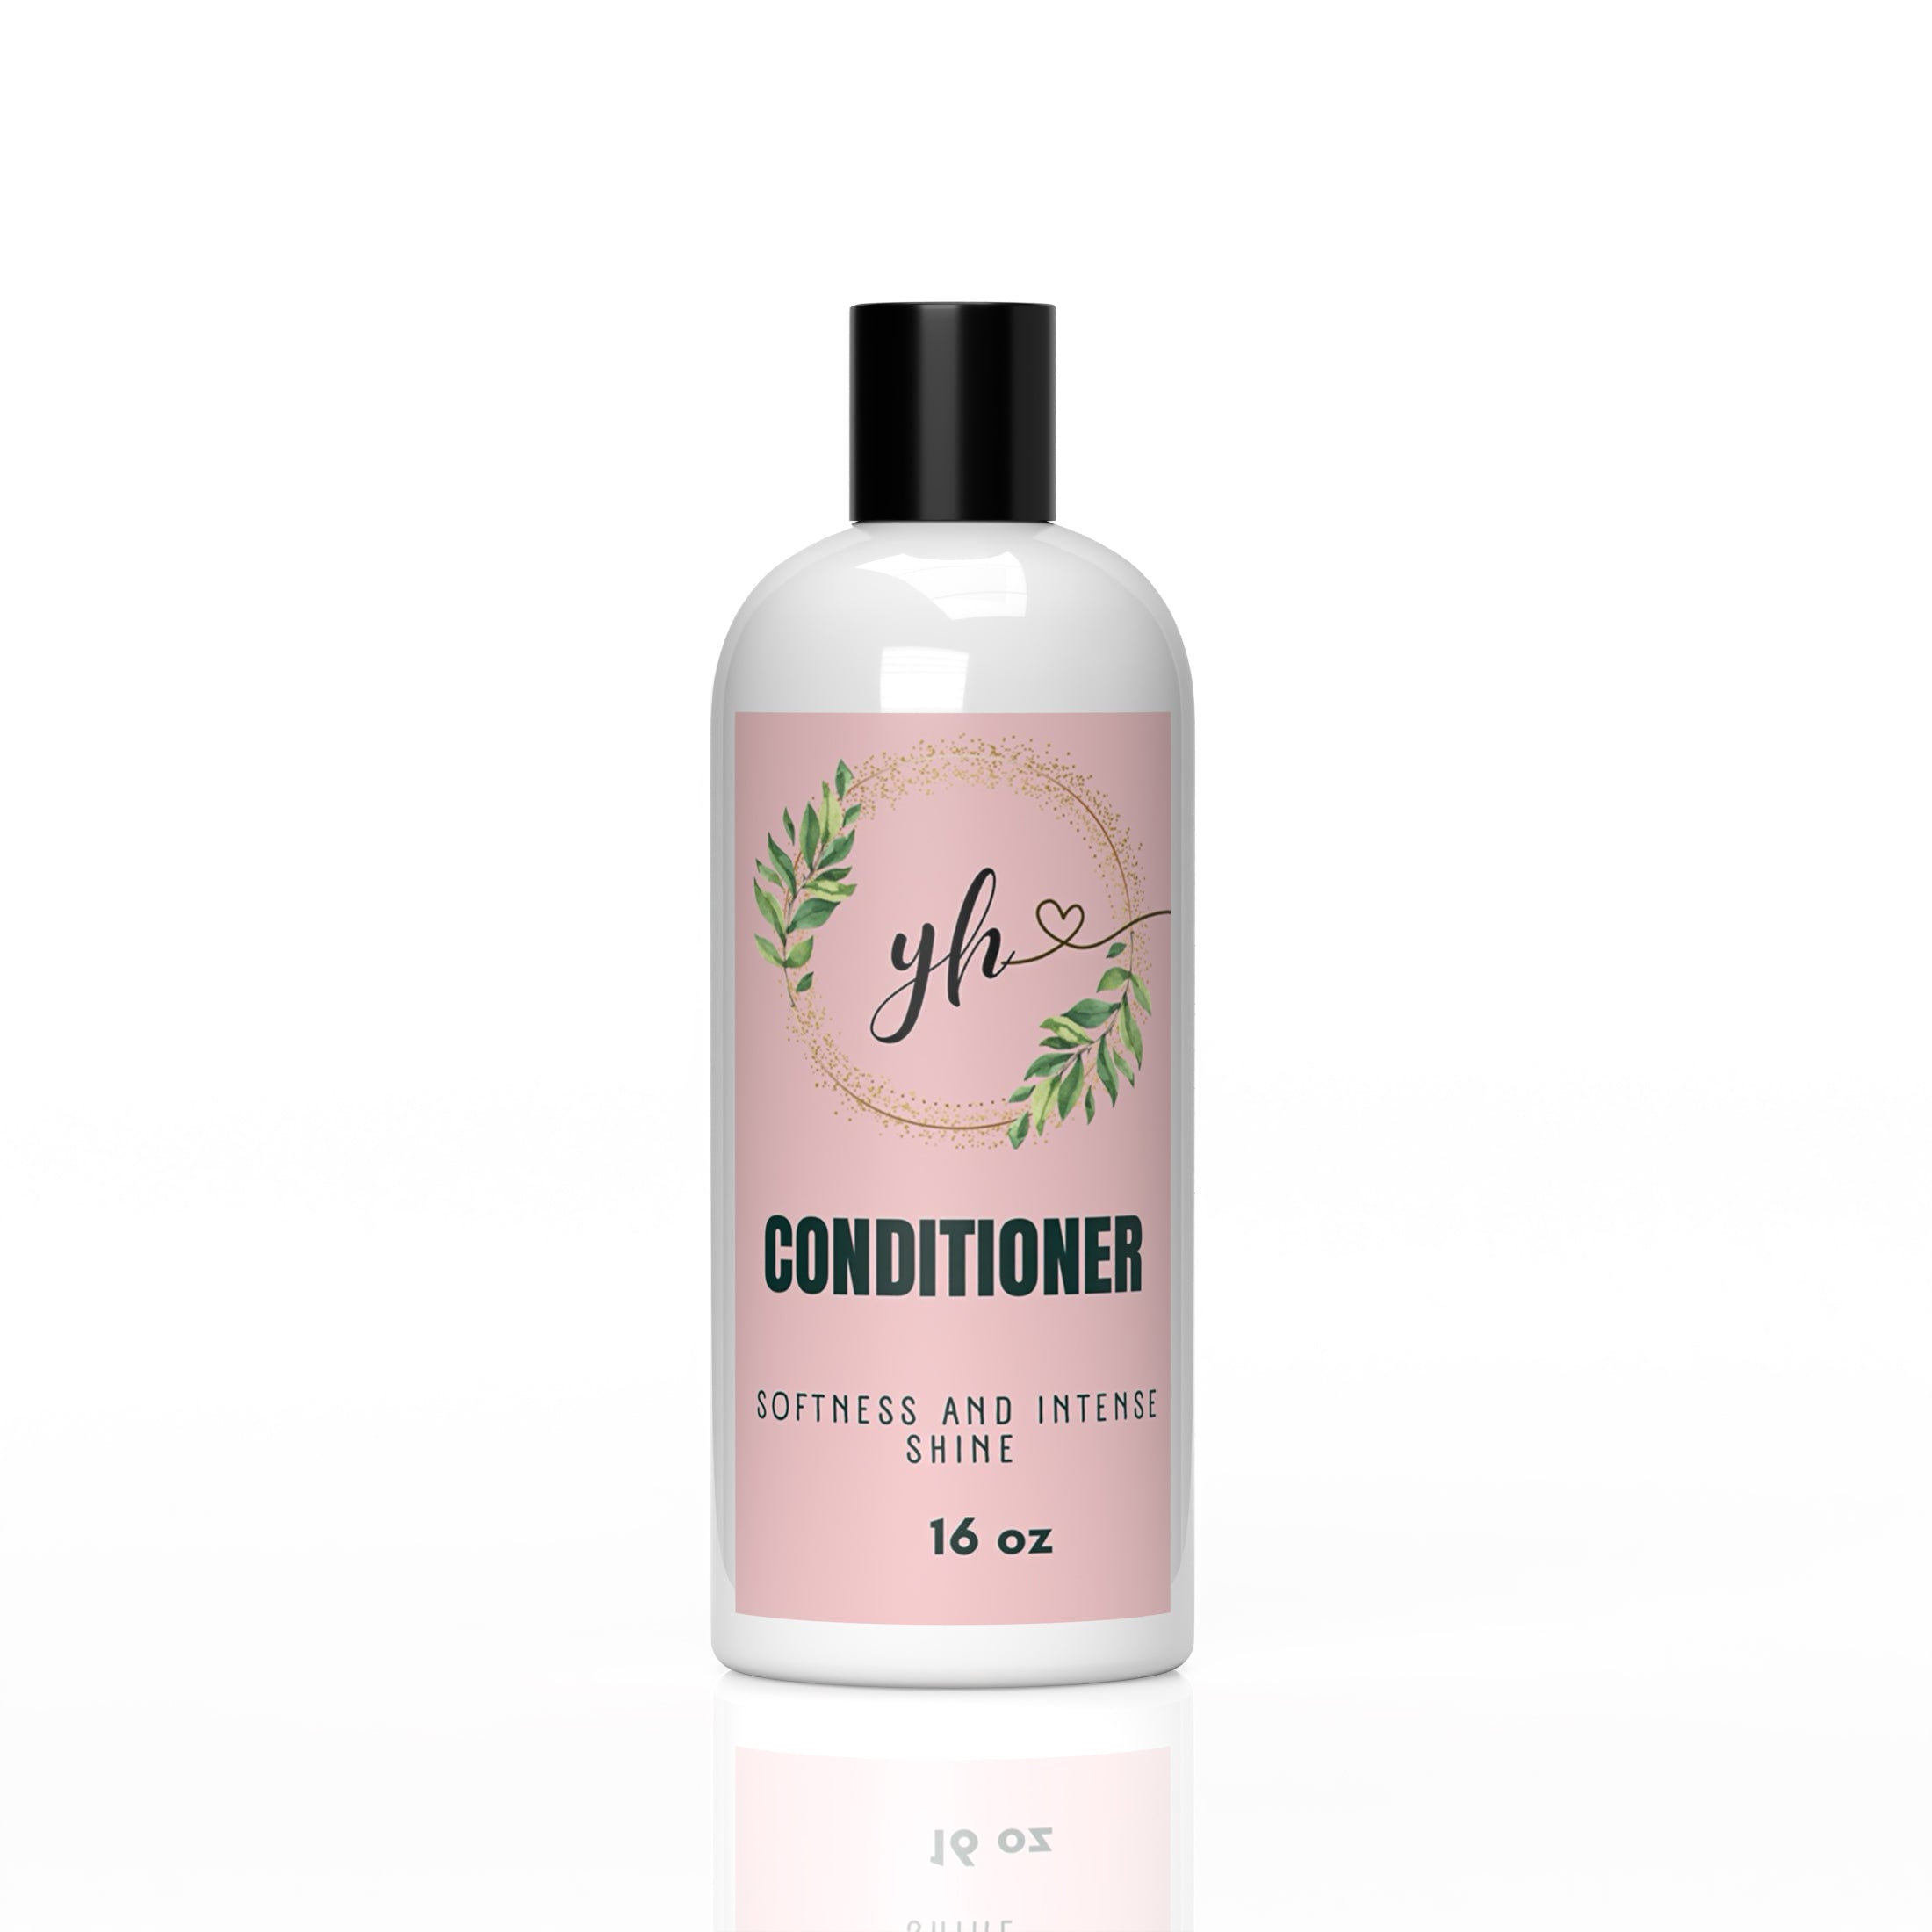 Conditioner softness and shine